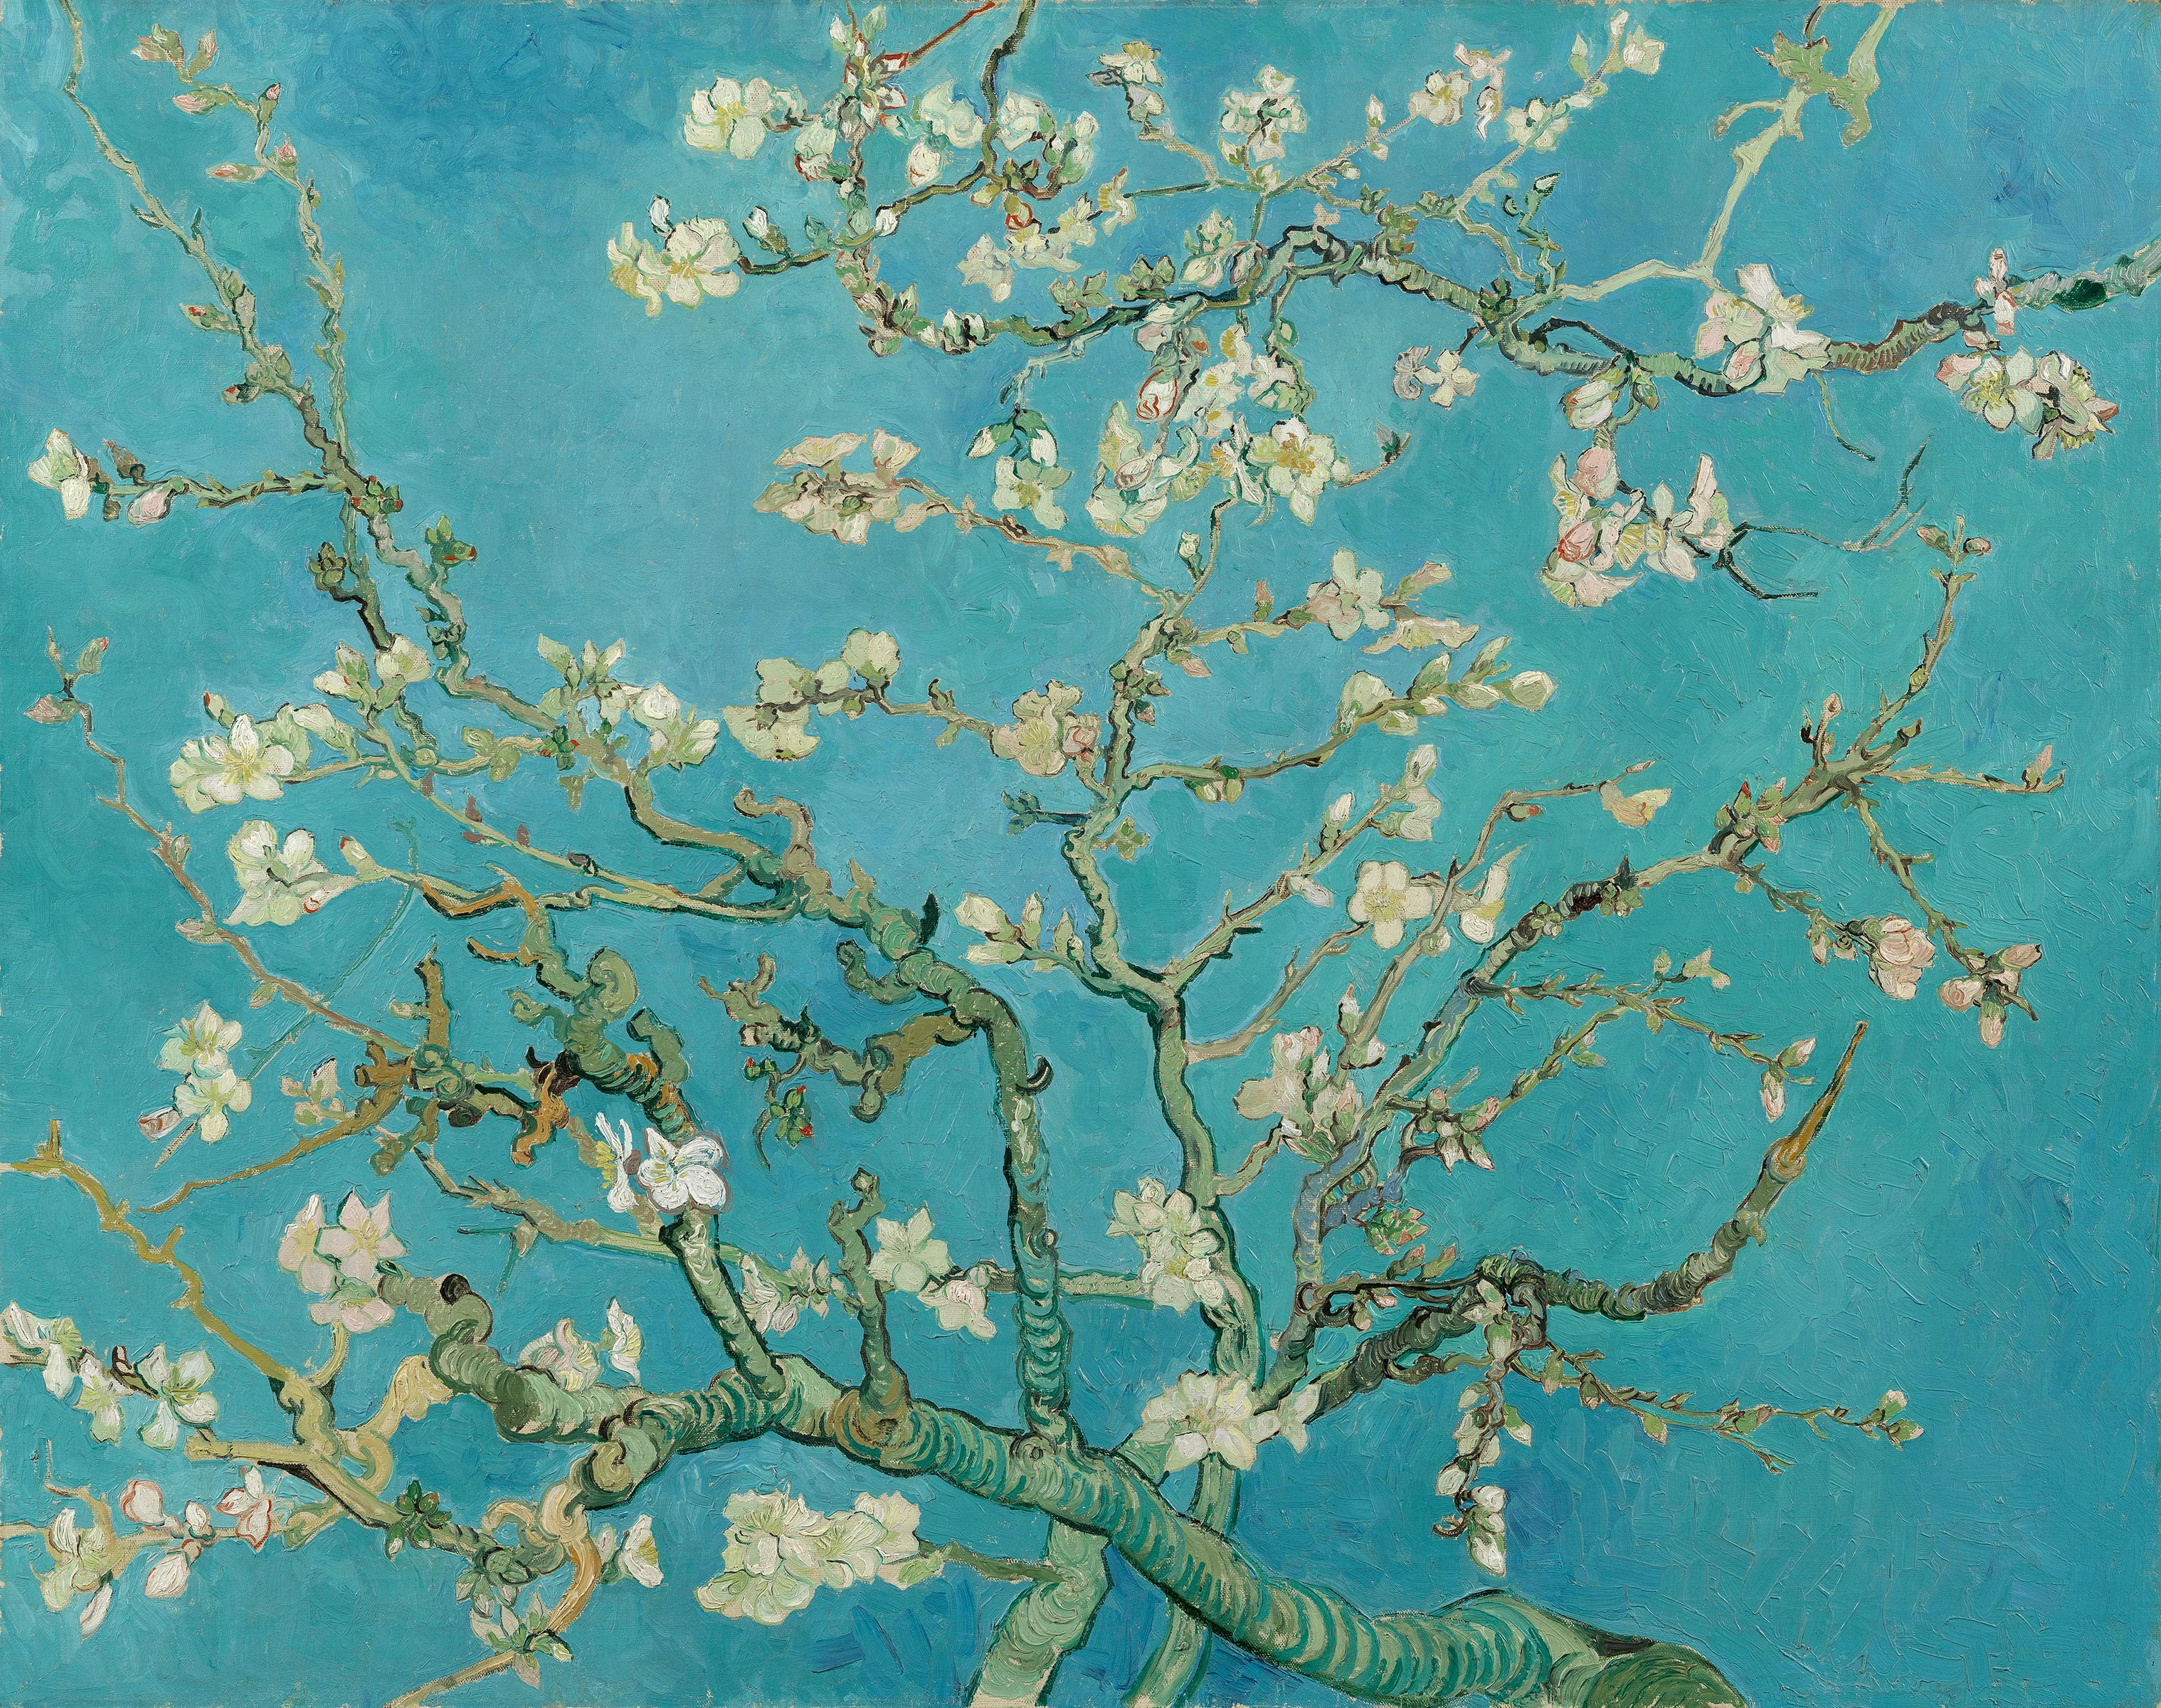 Almond Blossom, Vincent Van Gogh